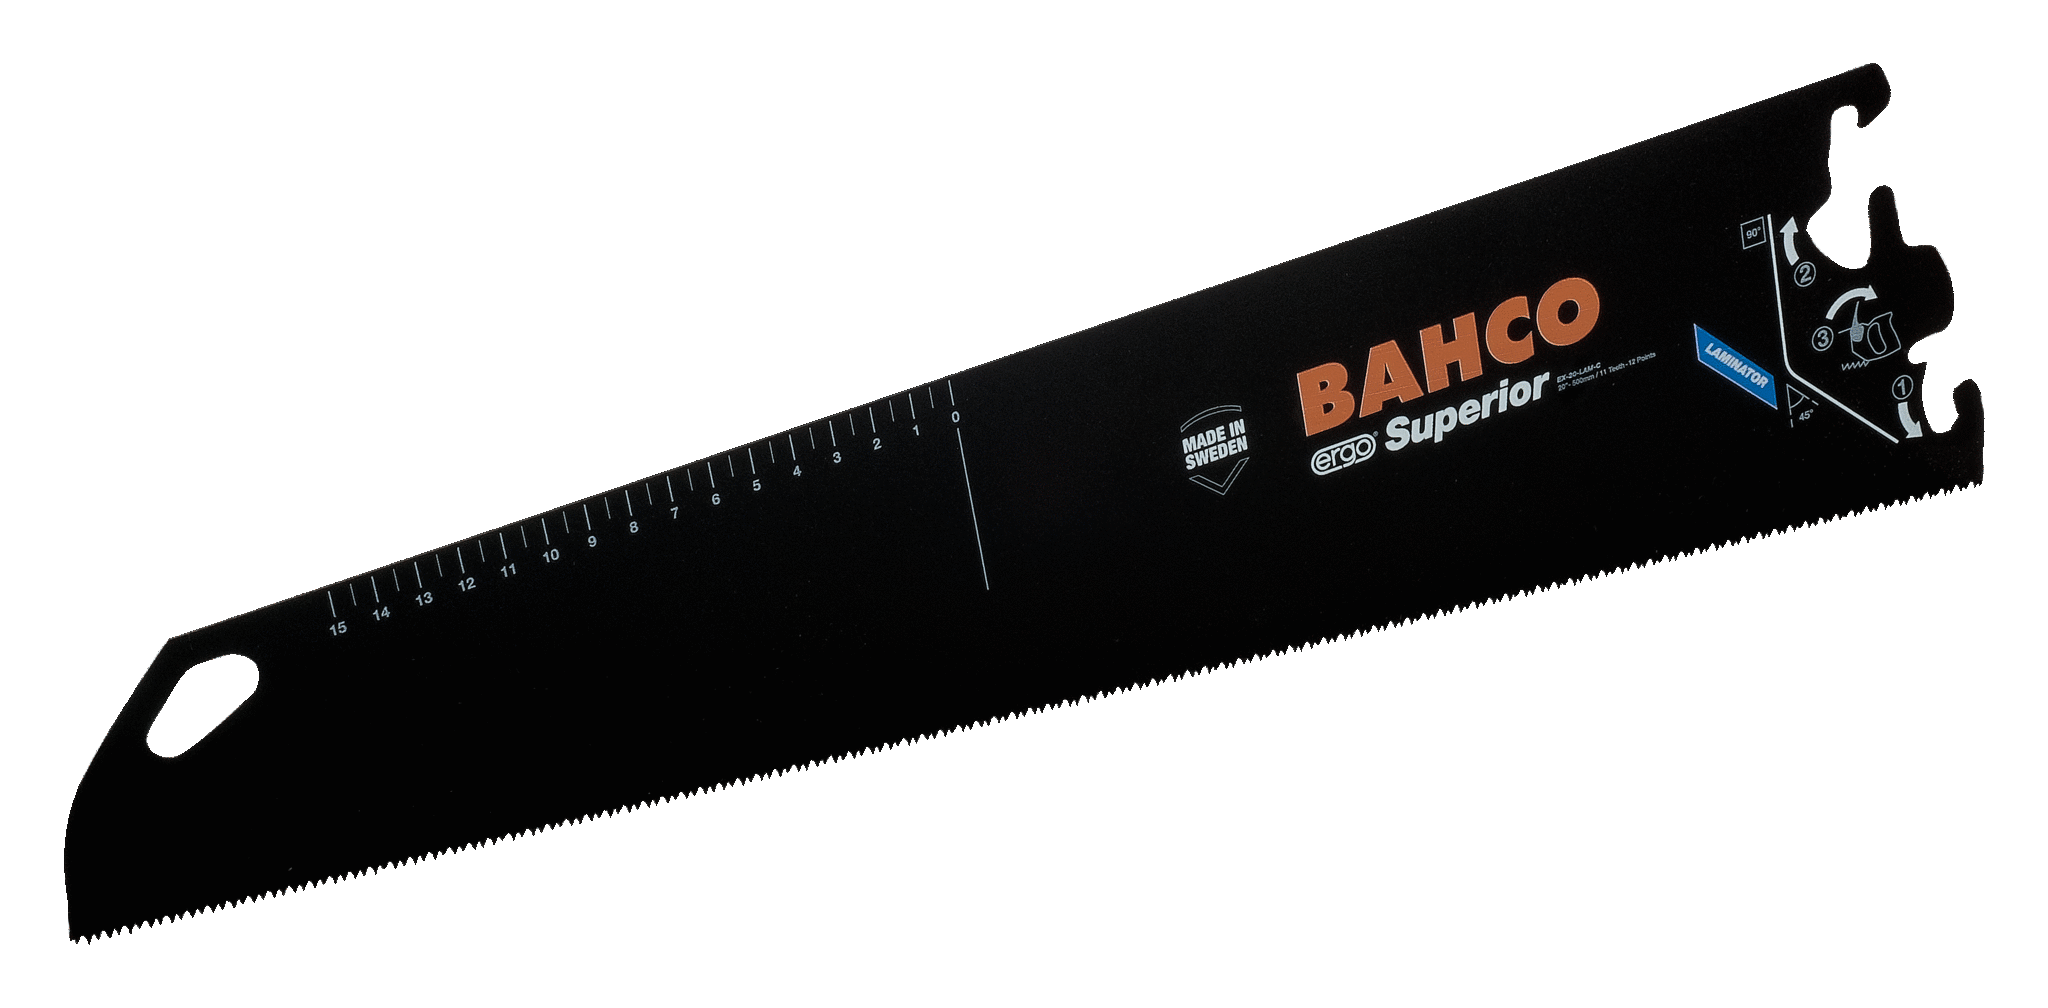 Superior™ Sawblades with ERGO™ EX Handles - EX-20-LAM-C by Bahco